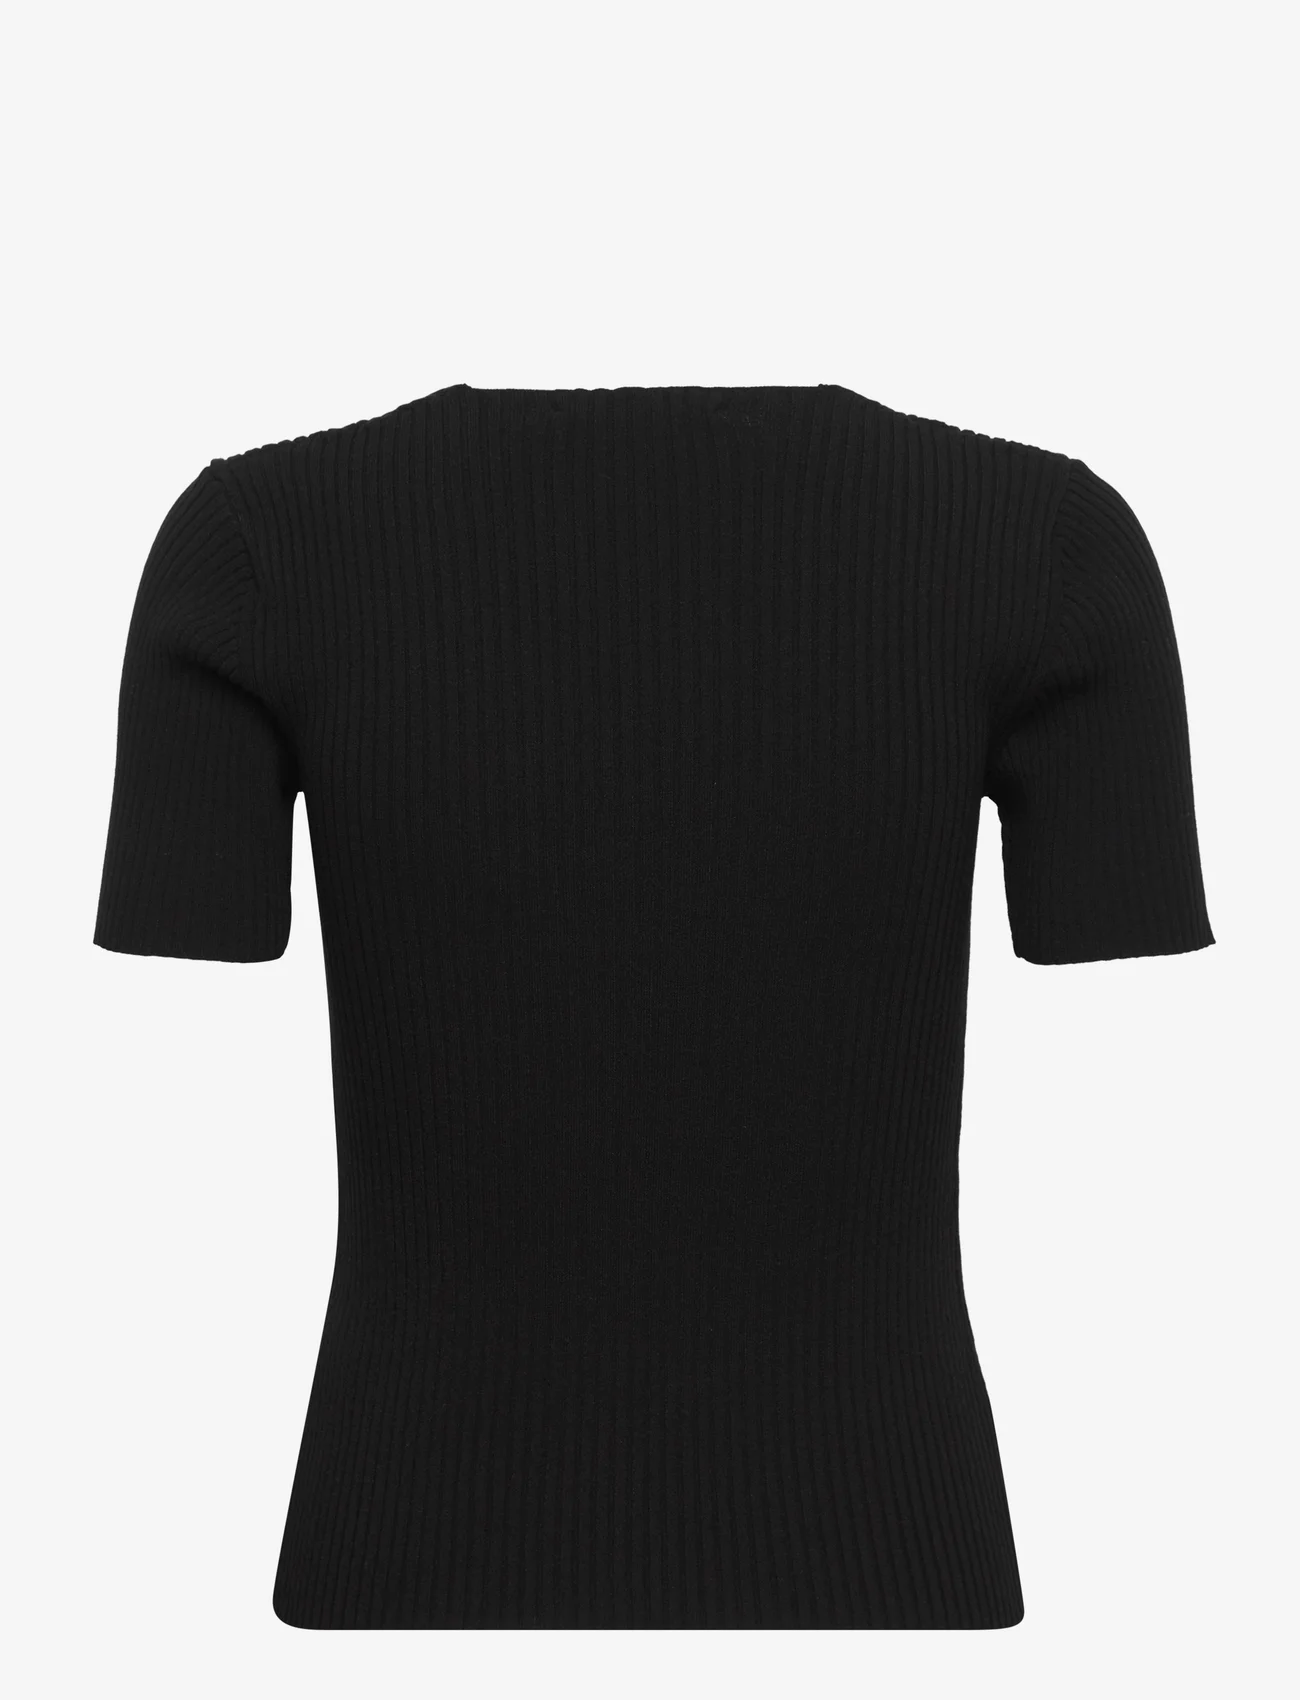 Rabens Saloner - Fabia - Contour knit short slv. top - t-shirt & tops - black - 1